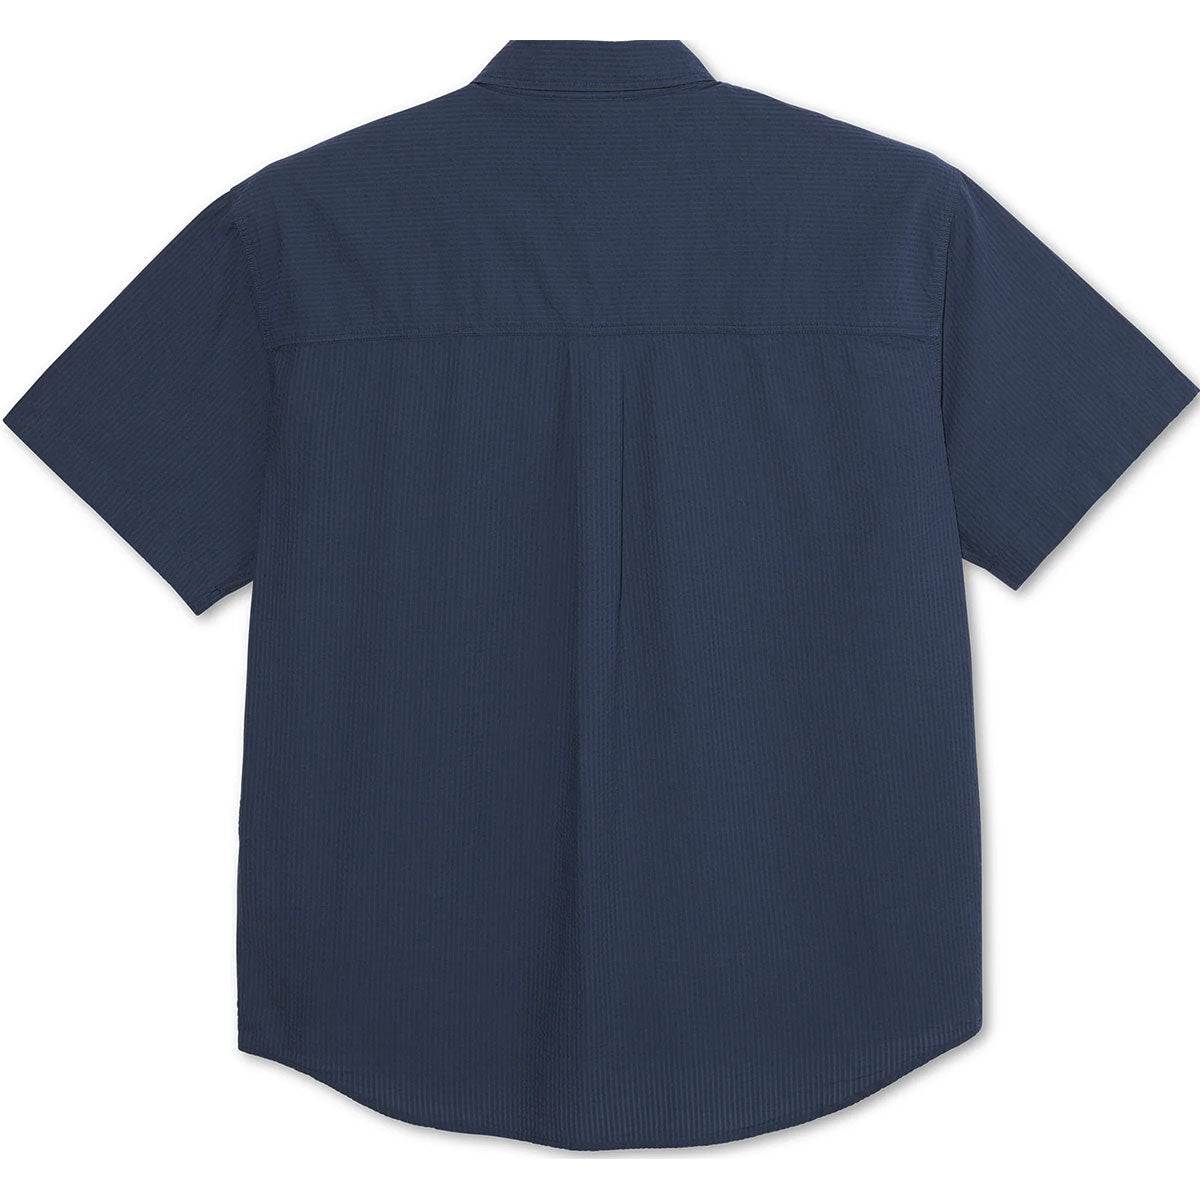 Polar Mitchell Shirt Seersucker Shirt - Grey Blue image 2